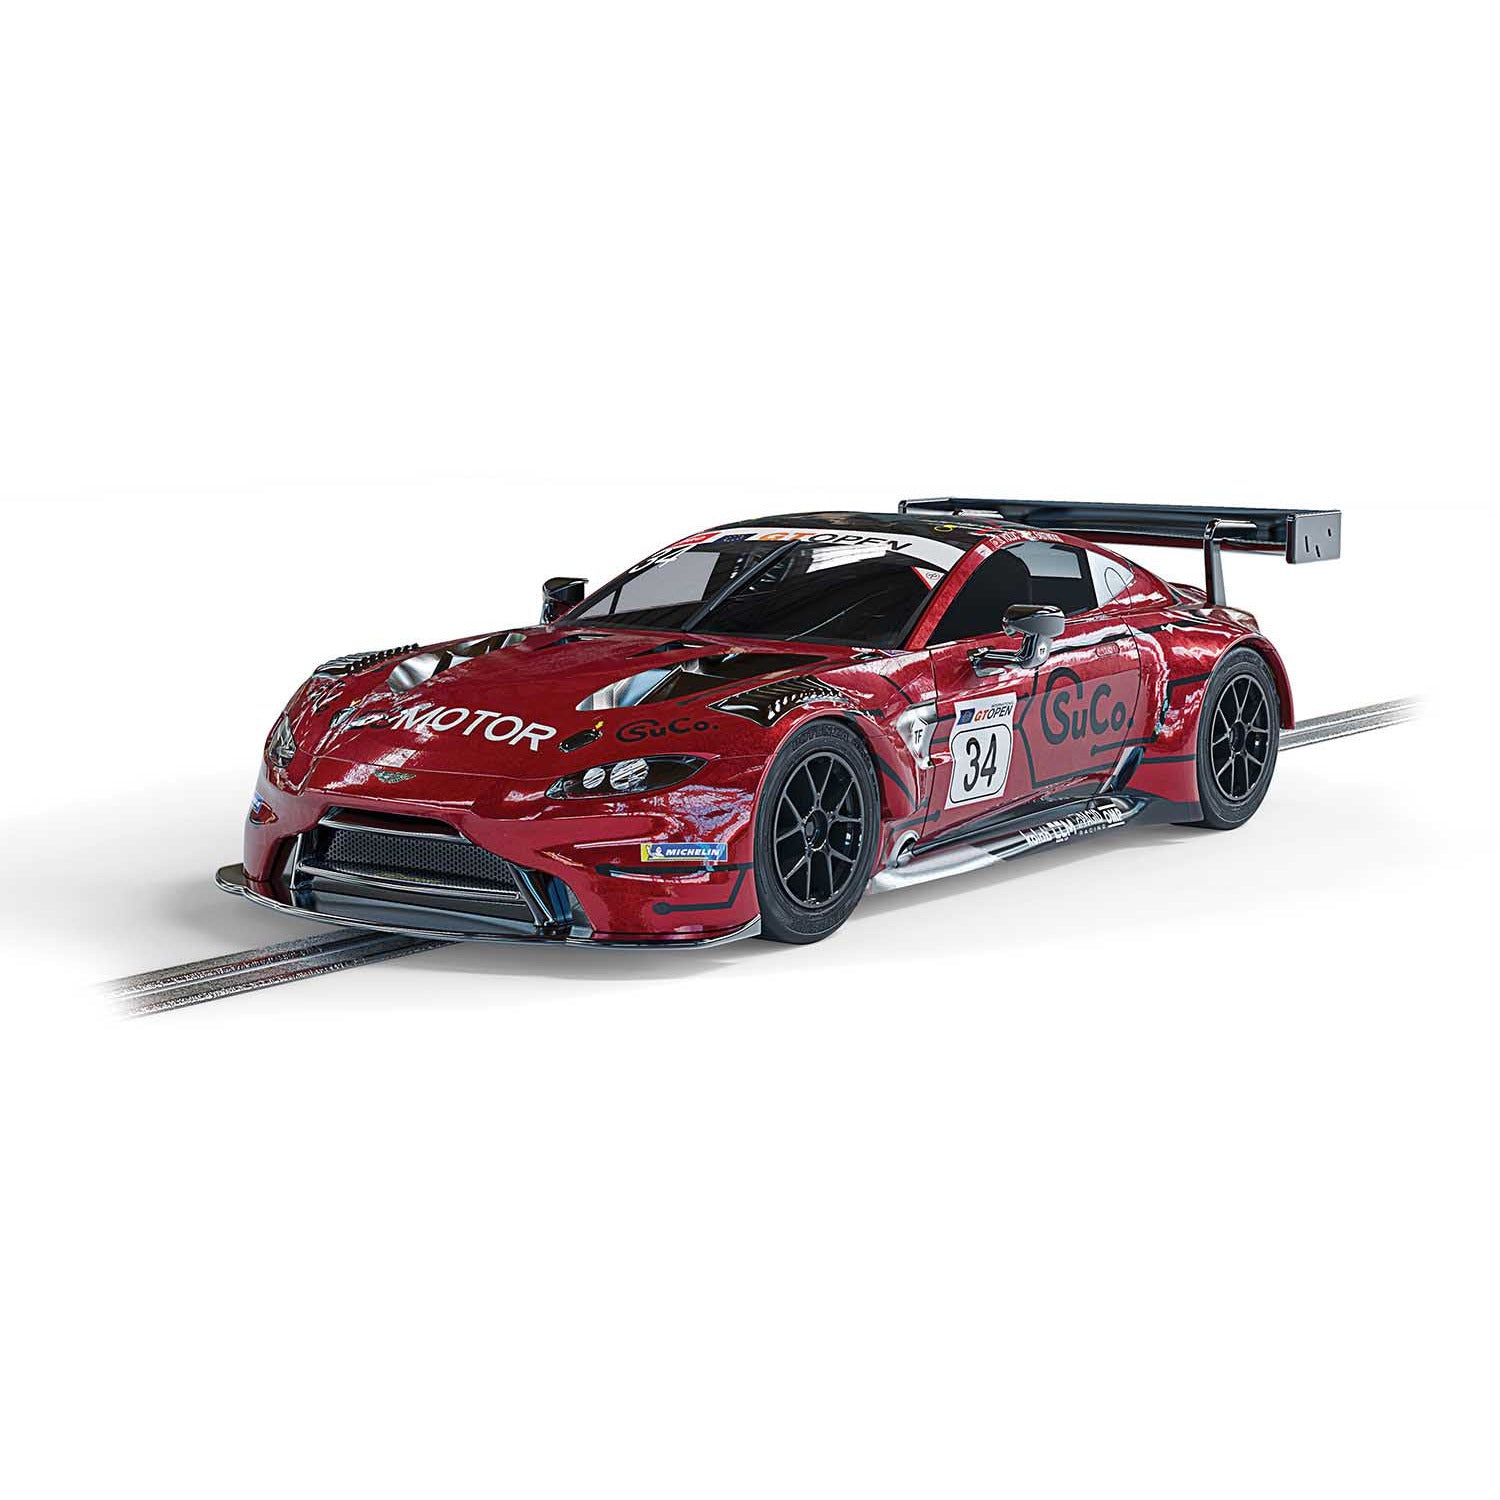 Aston Martin Gt3vantage - Tf Sportgt Open 2020 Scalextric Slot Car